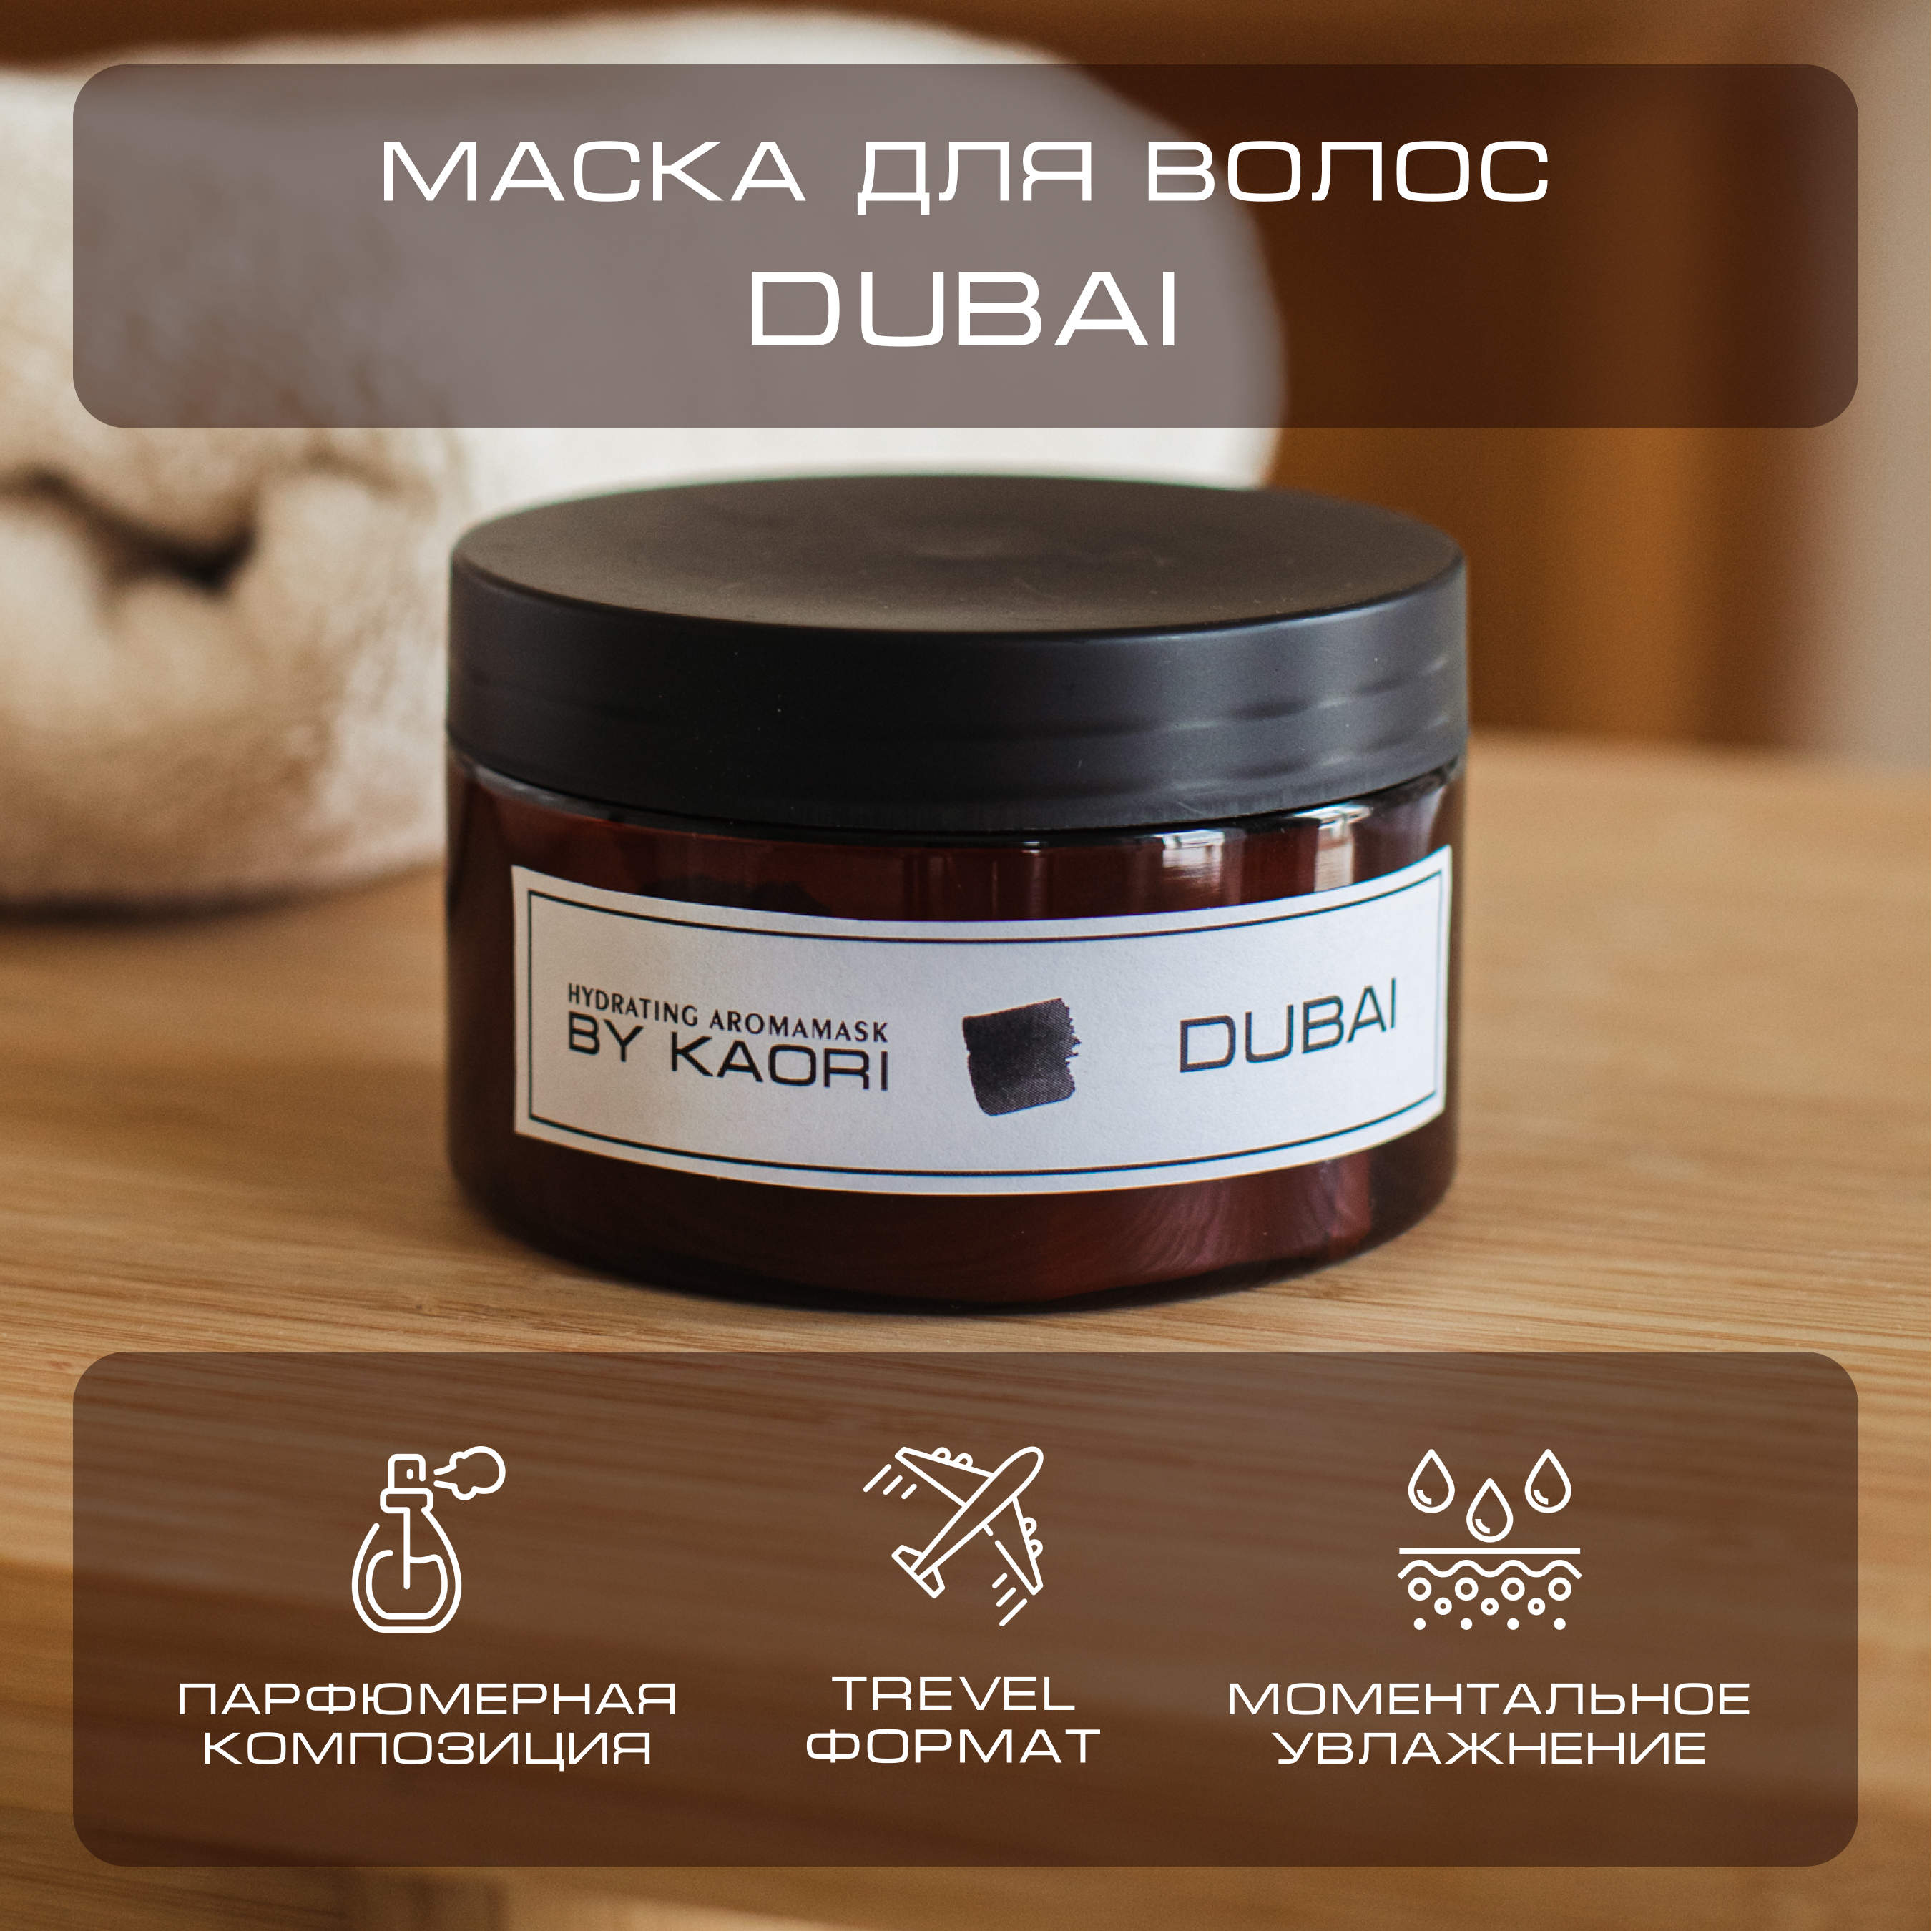 Интенсивная питательная маска для волос By Kaori тревел-формат аромат Dubai 100 мл маска для волос питательная репейная банка 155 мл